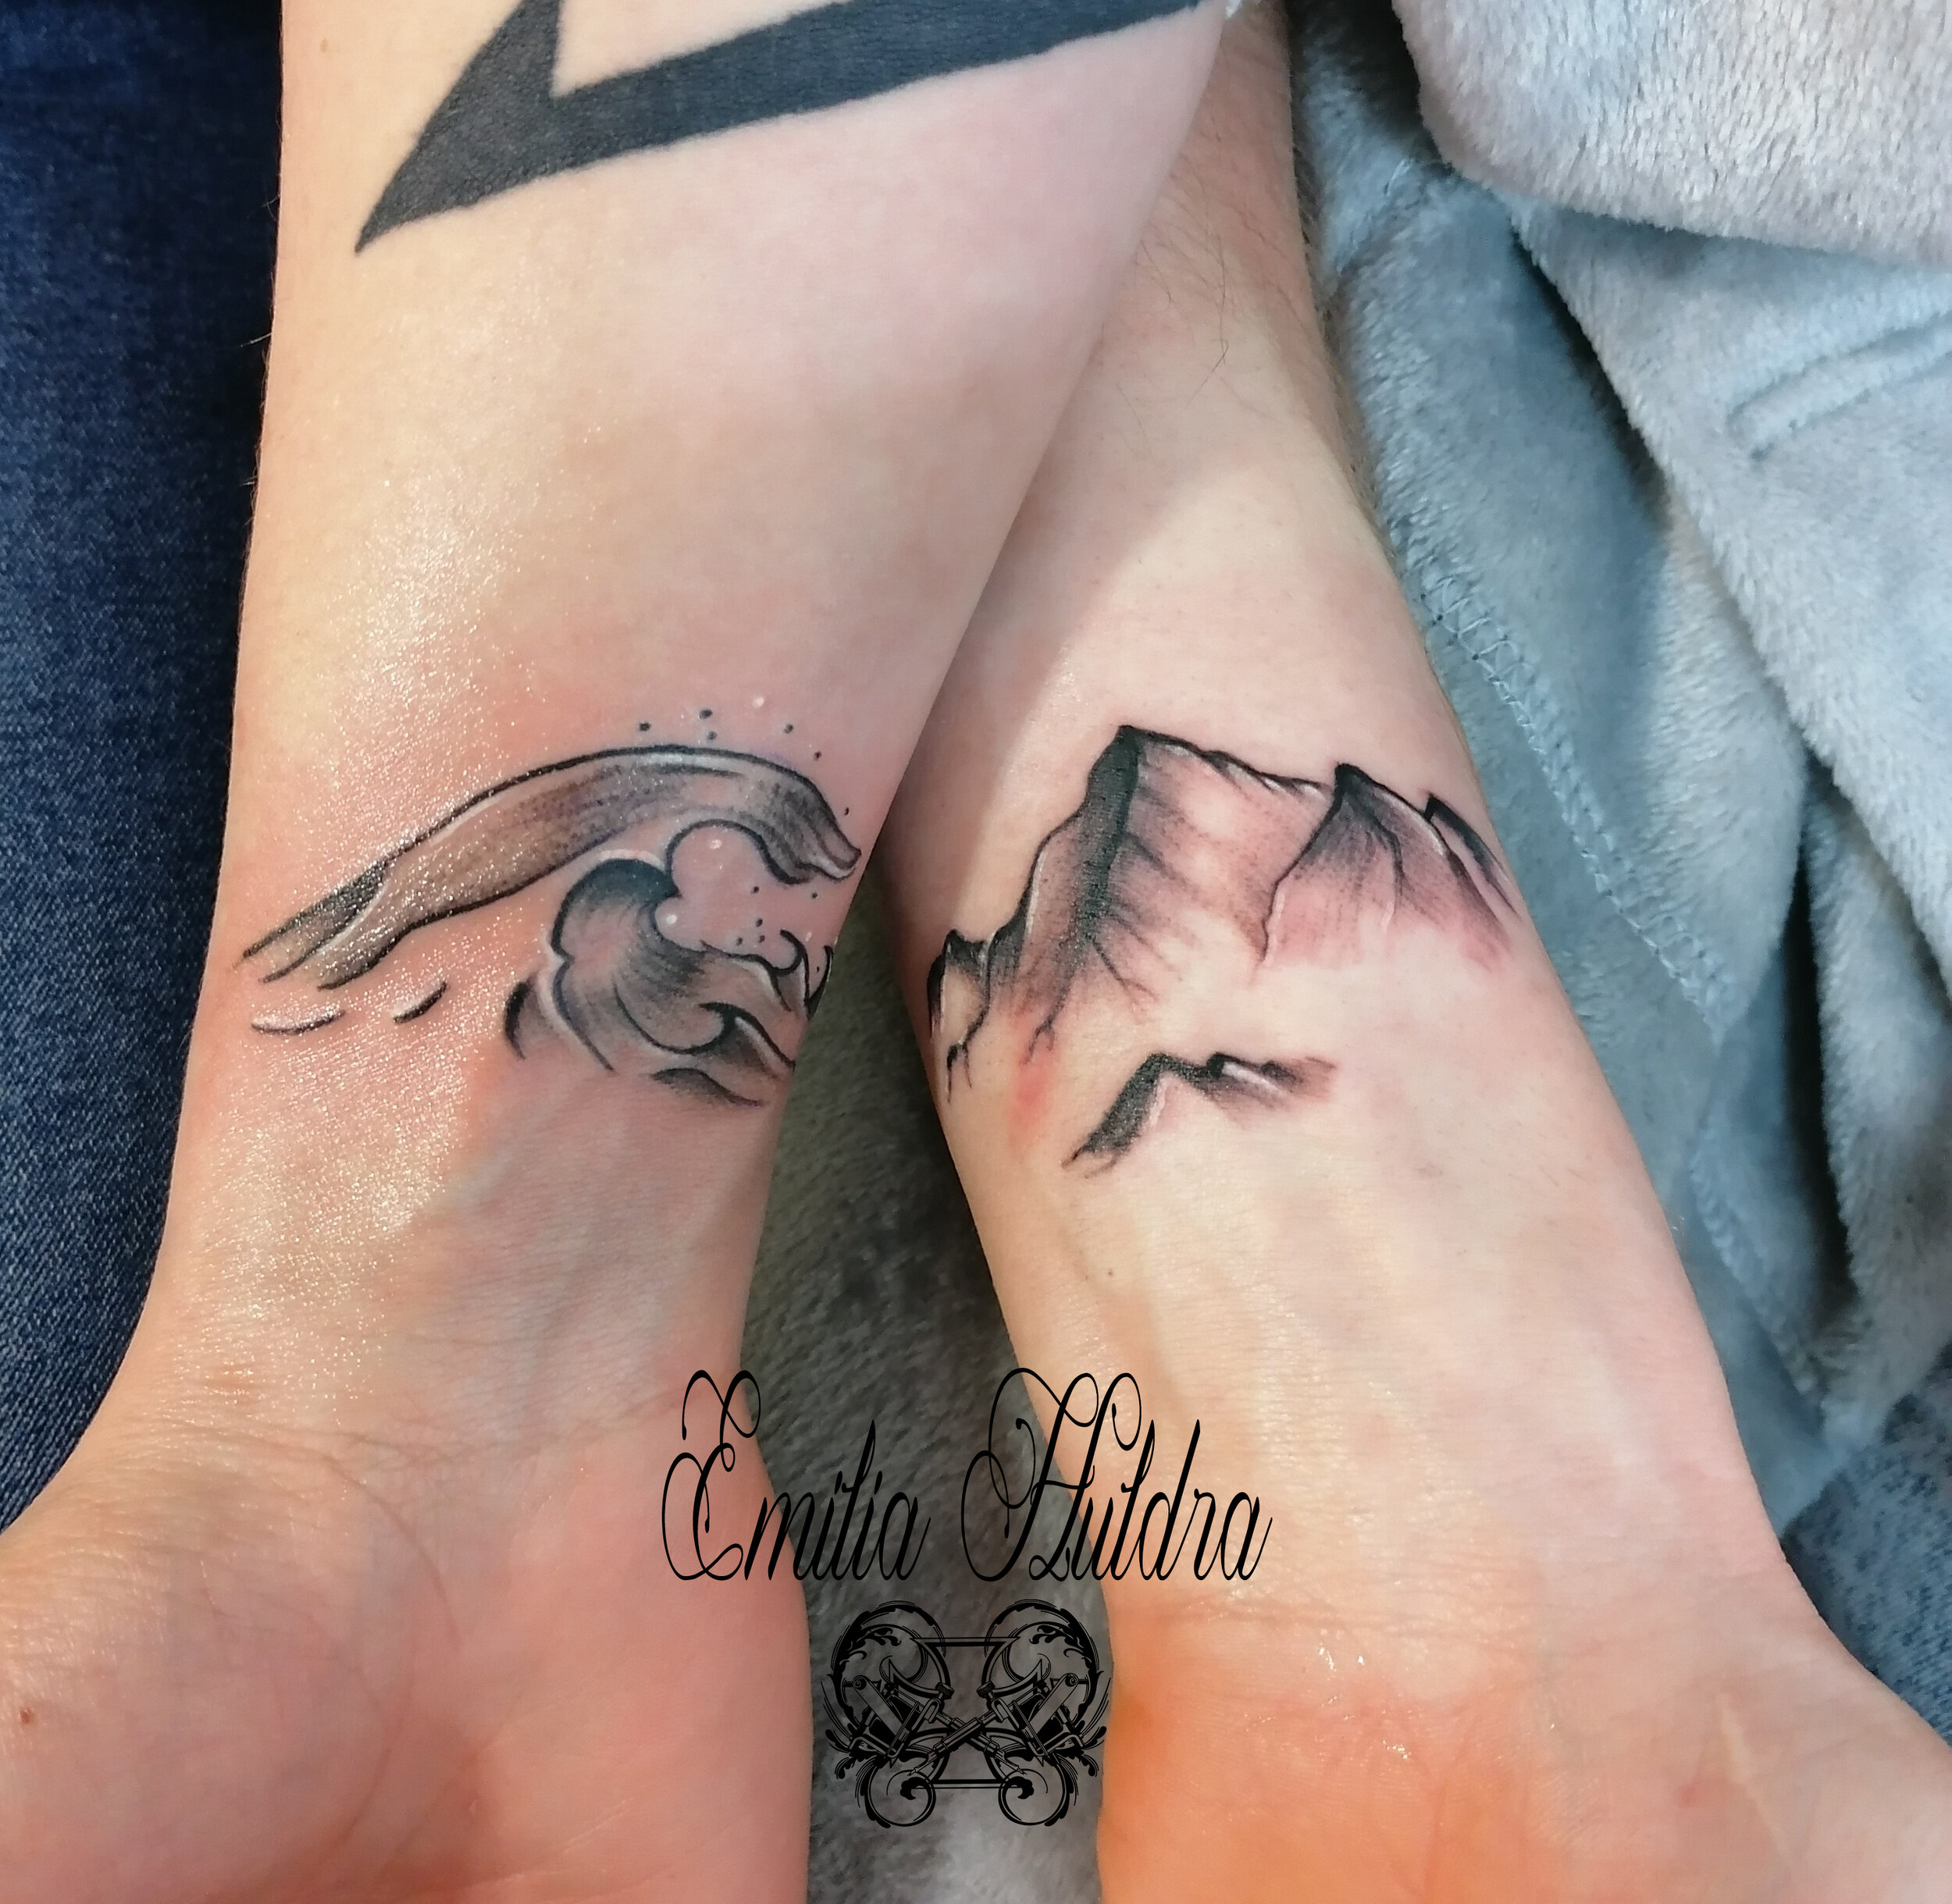 Emila - wave and mountain - couple tattoo - edited .jpg